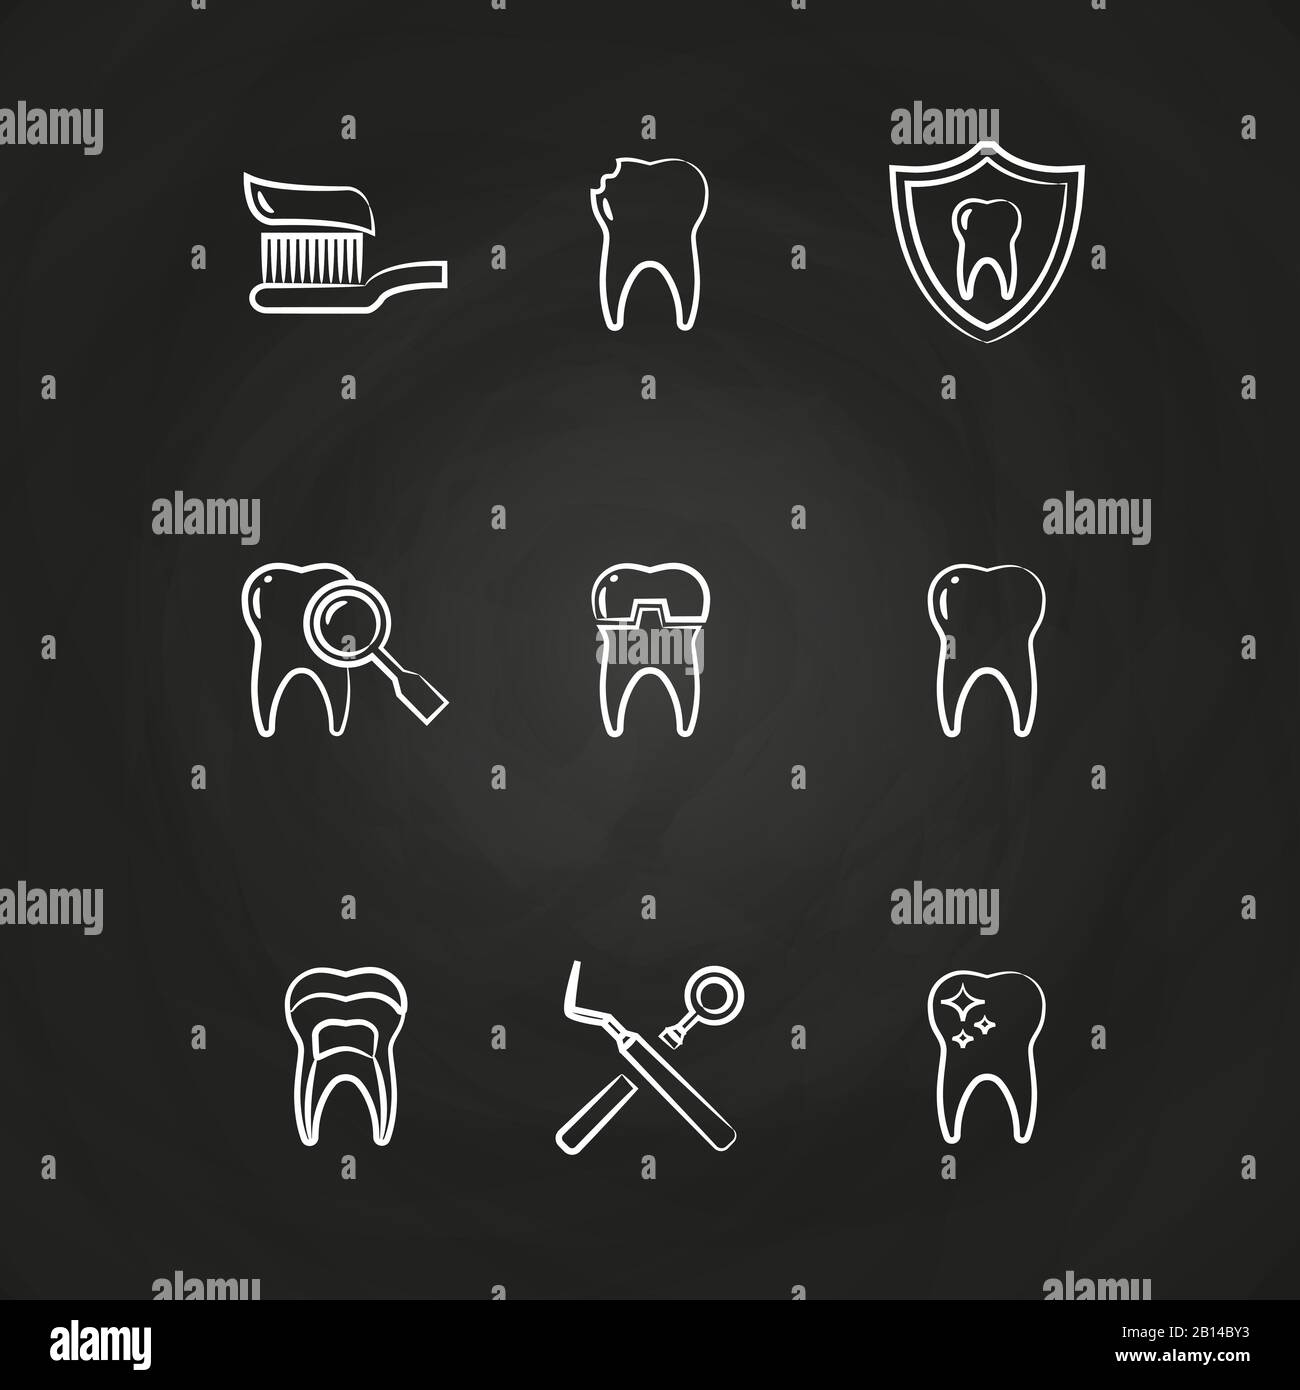 Dental icons set - teeth line icons on chalkboard. Dental set icons drawing, vector illustration Stock Vector